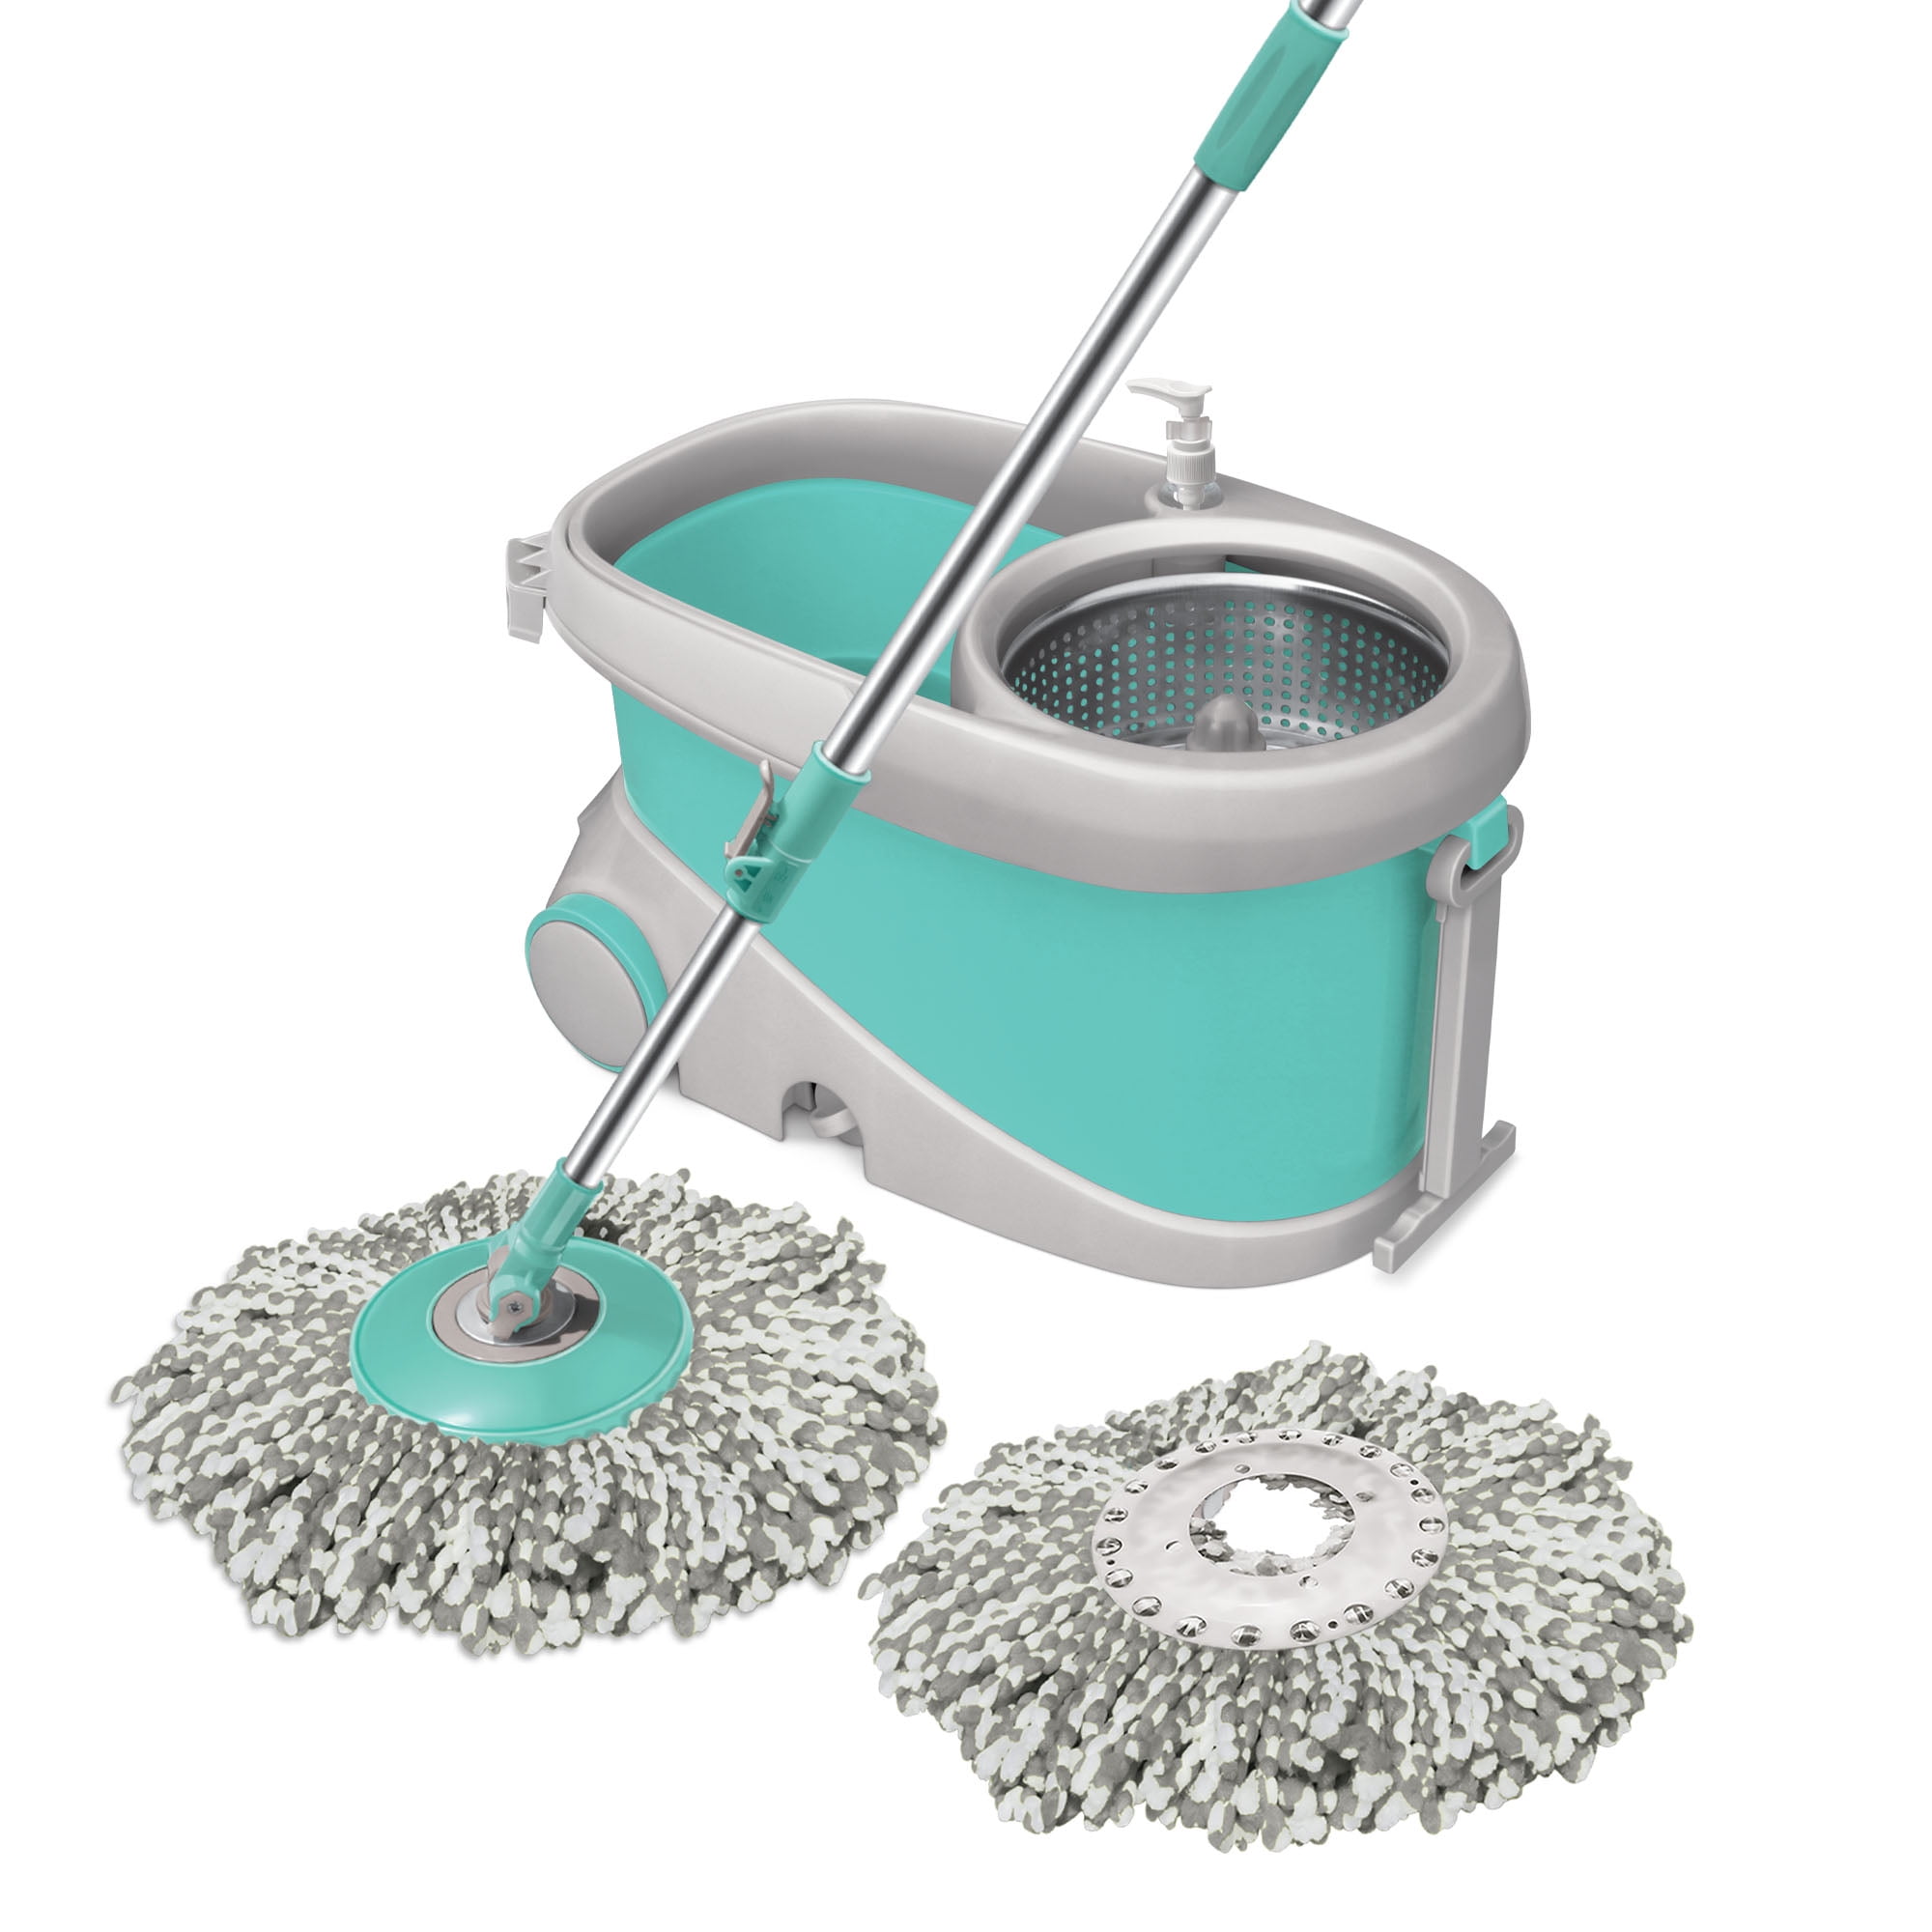 Celltone Aqua Spin Mop Bucket With Wheel, Floor Cleaning Supplies